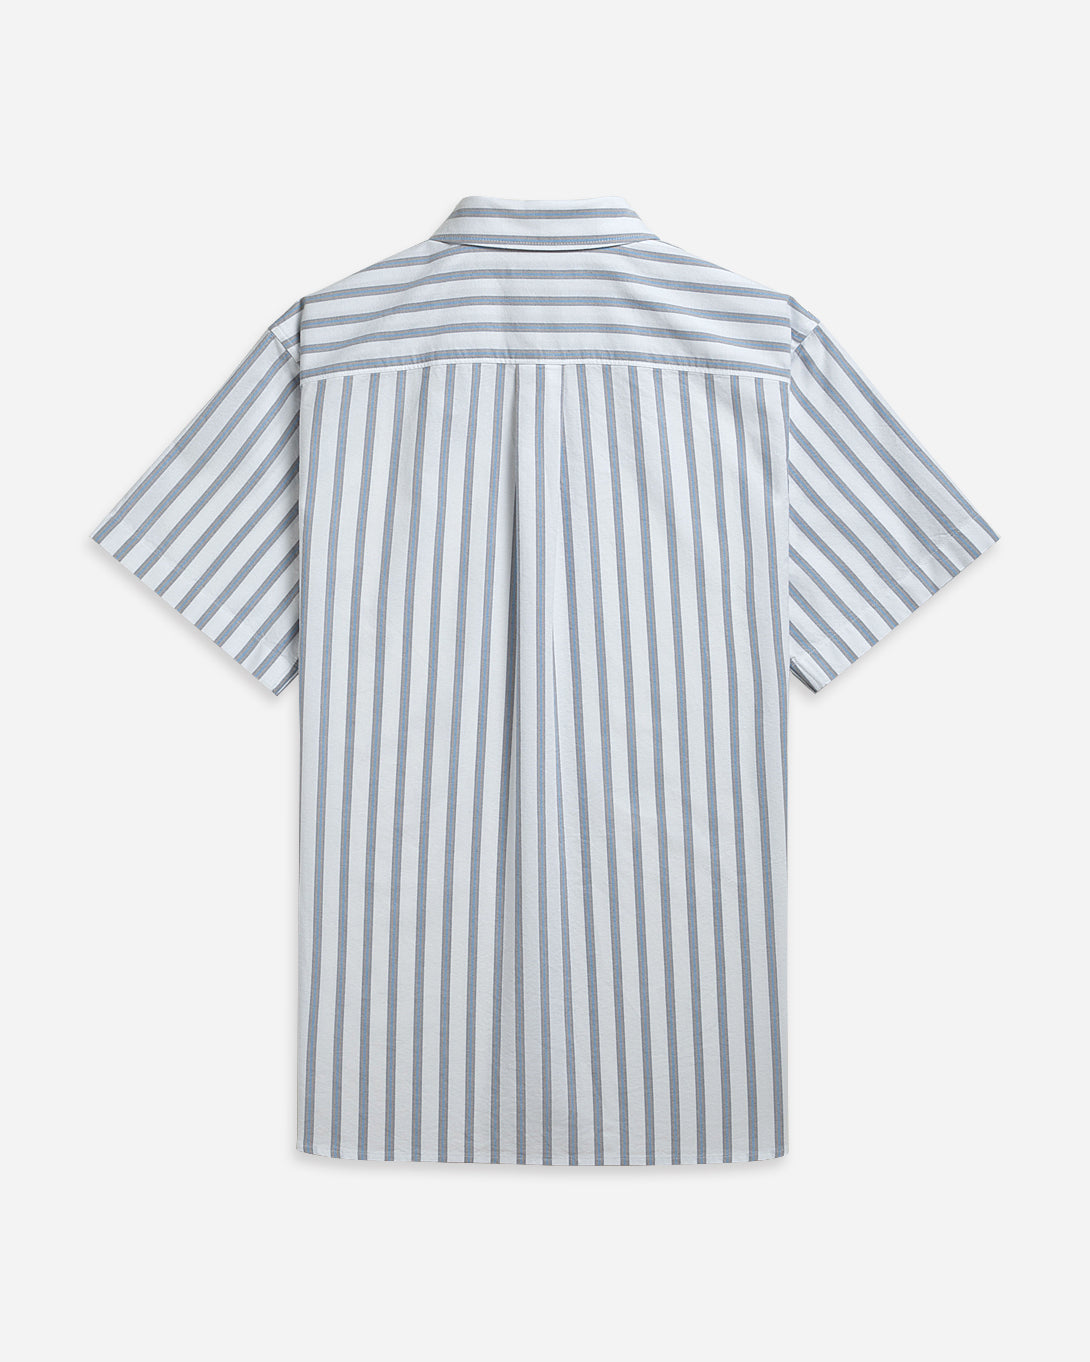 Bright White/Blue Stripe Fulton SS Stripe Oxford Shirt Mens Short Sleeve Button Down